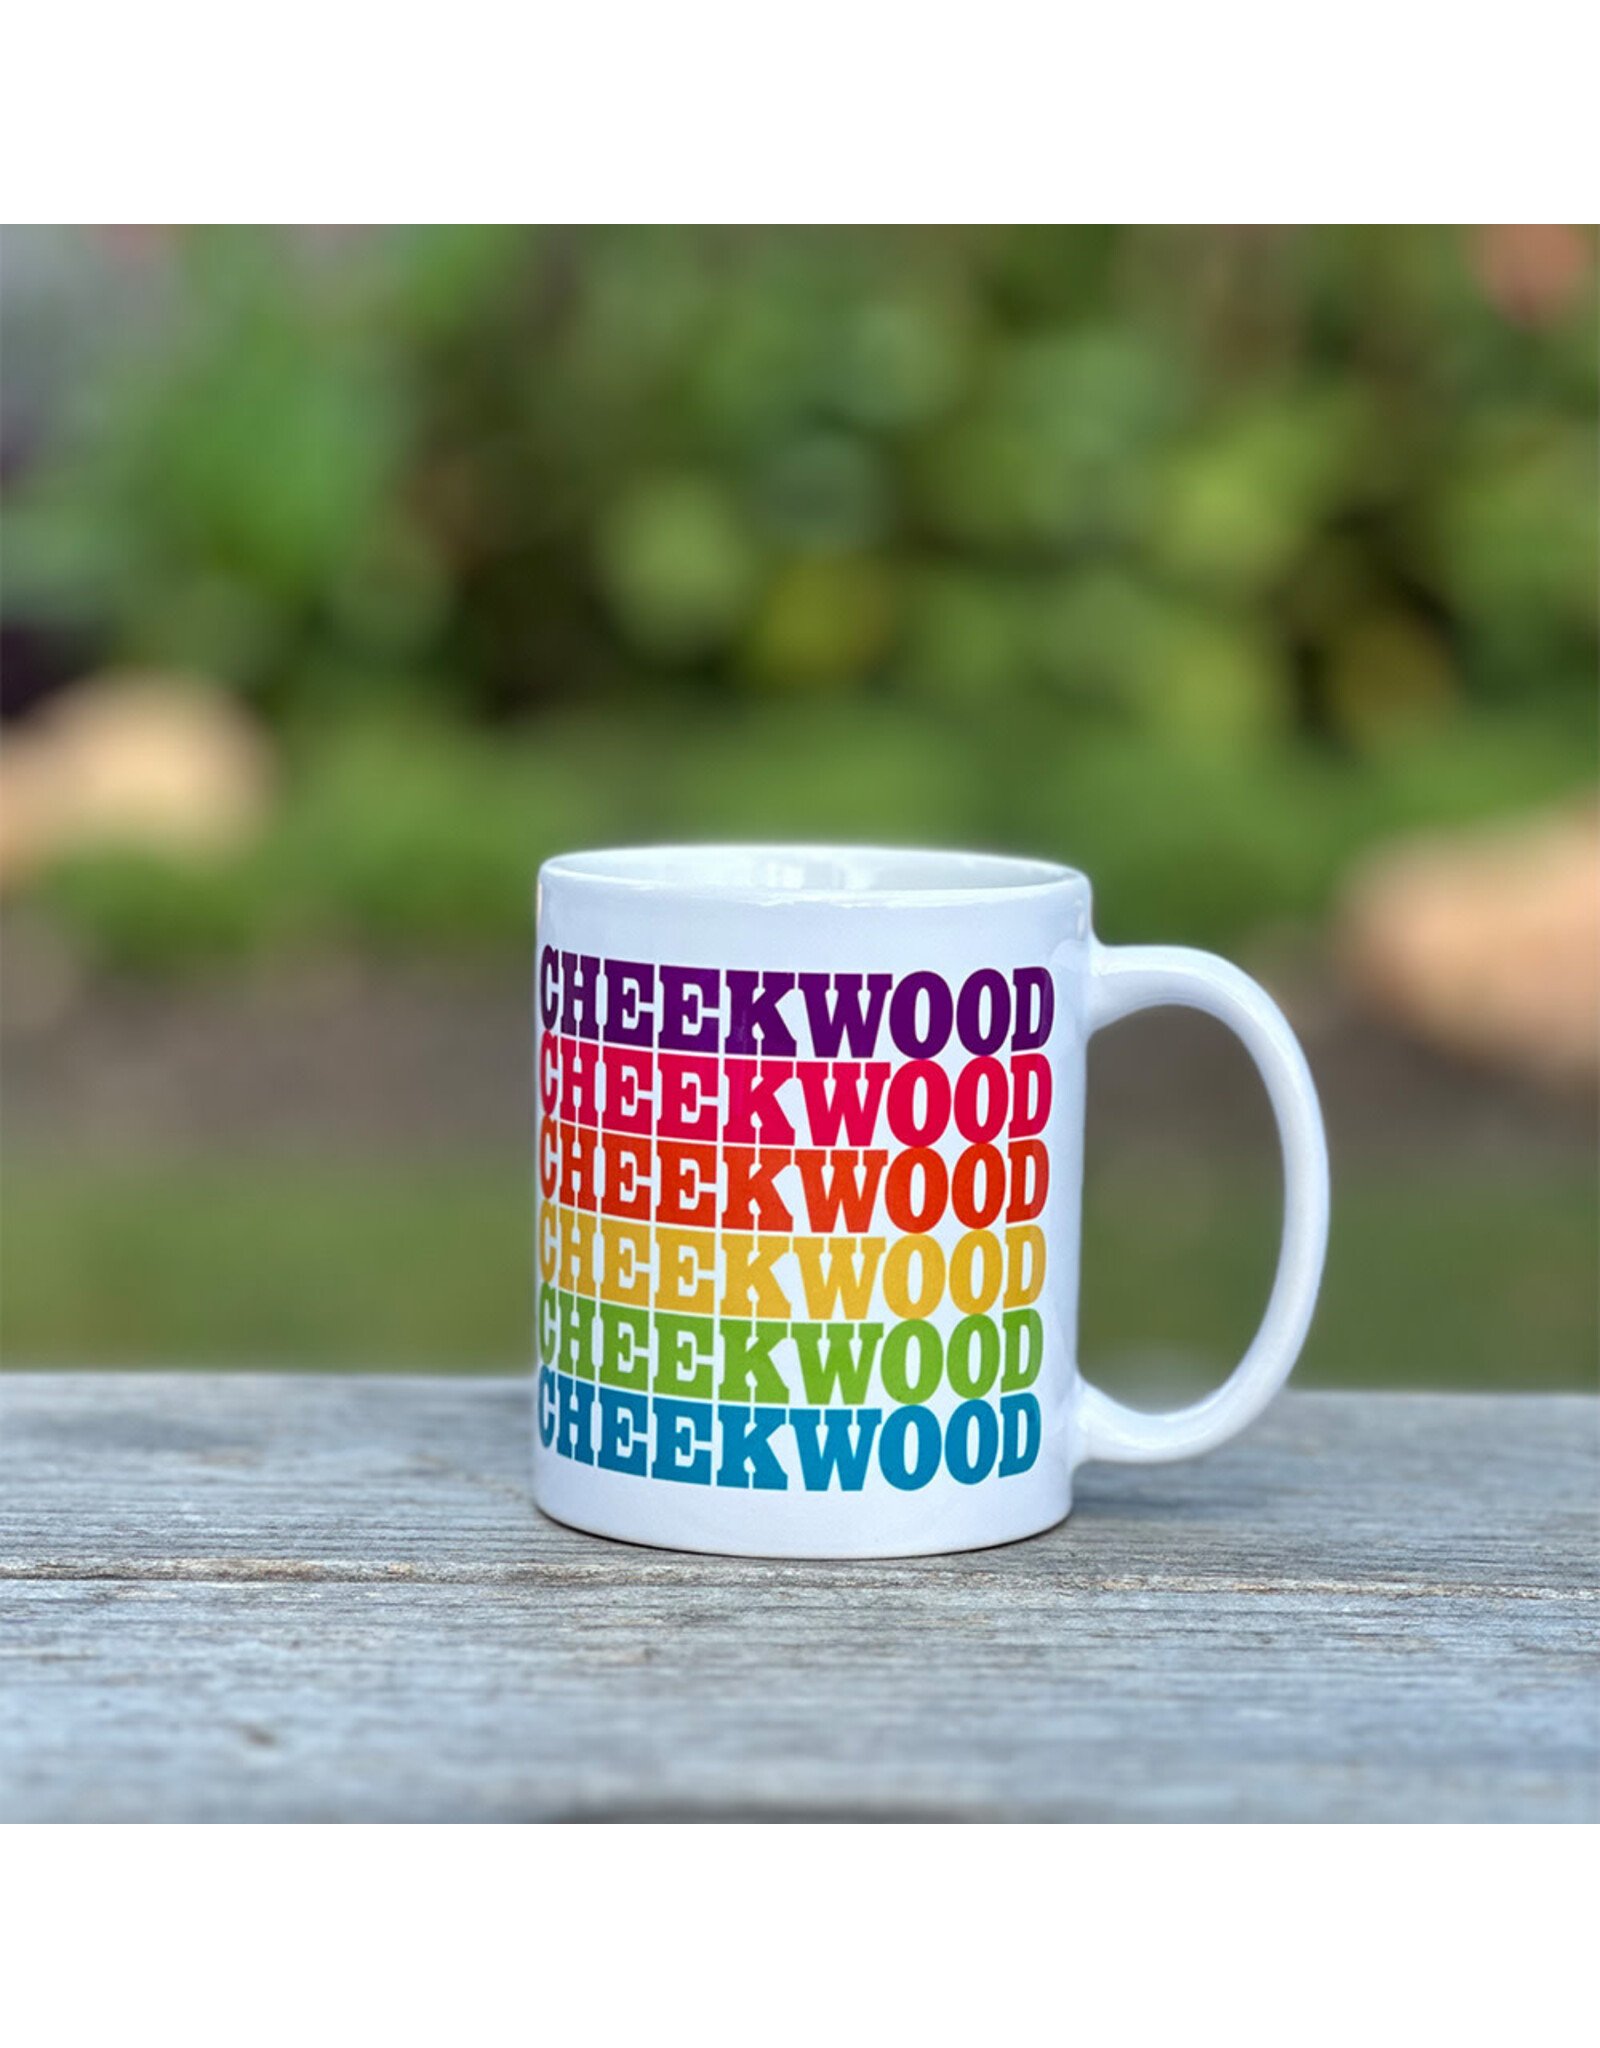 RSP Cheekwood Mug